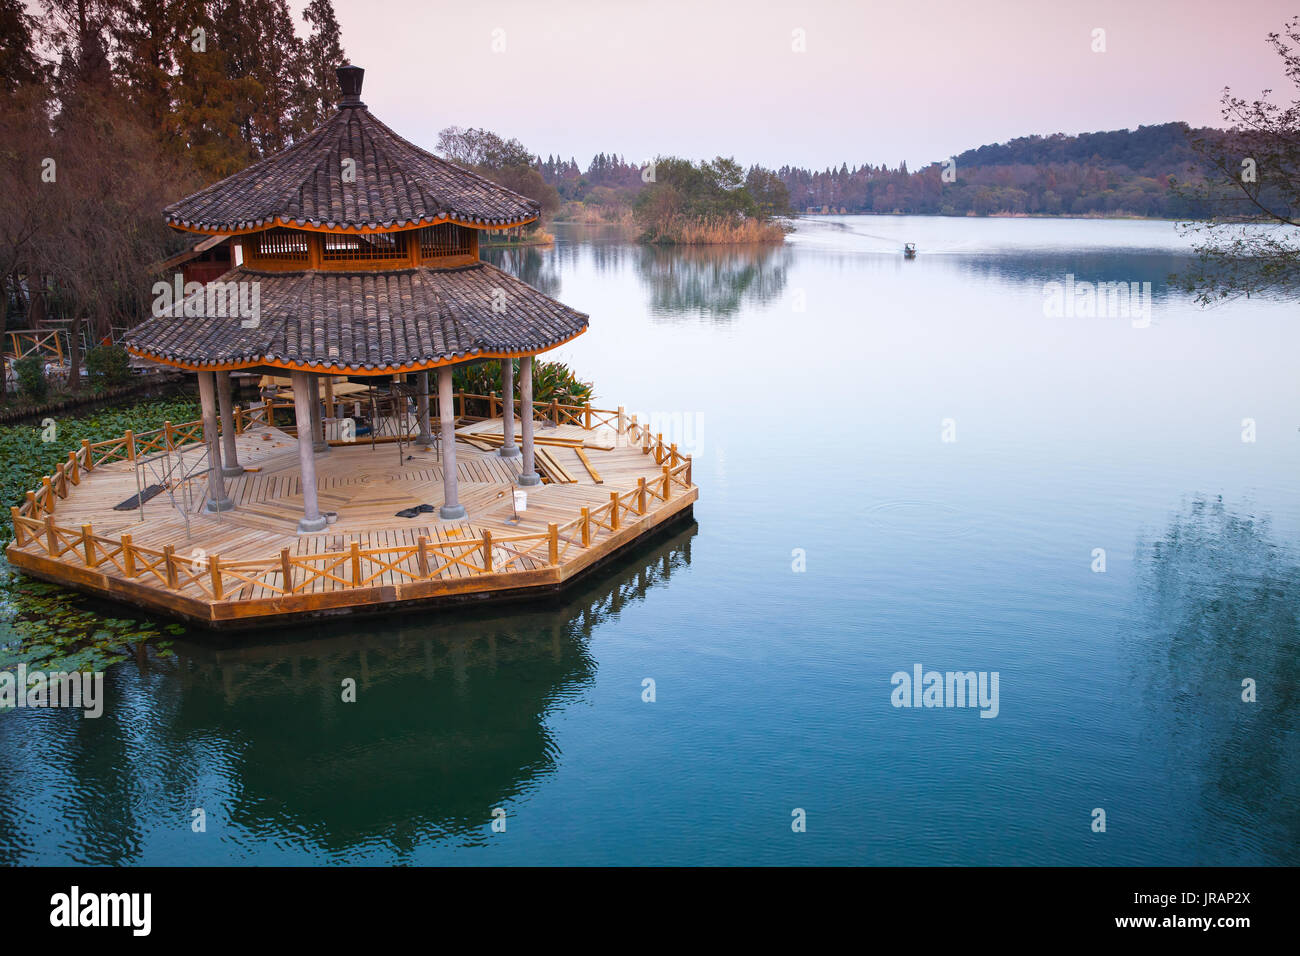 Chinese traditional wooden gazebo on the coast of West Lake, public park in Hangzhou city, China Stock Photo